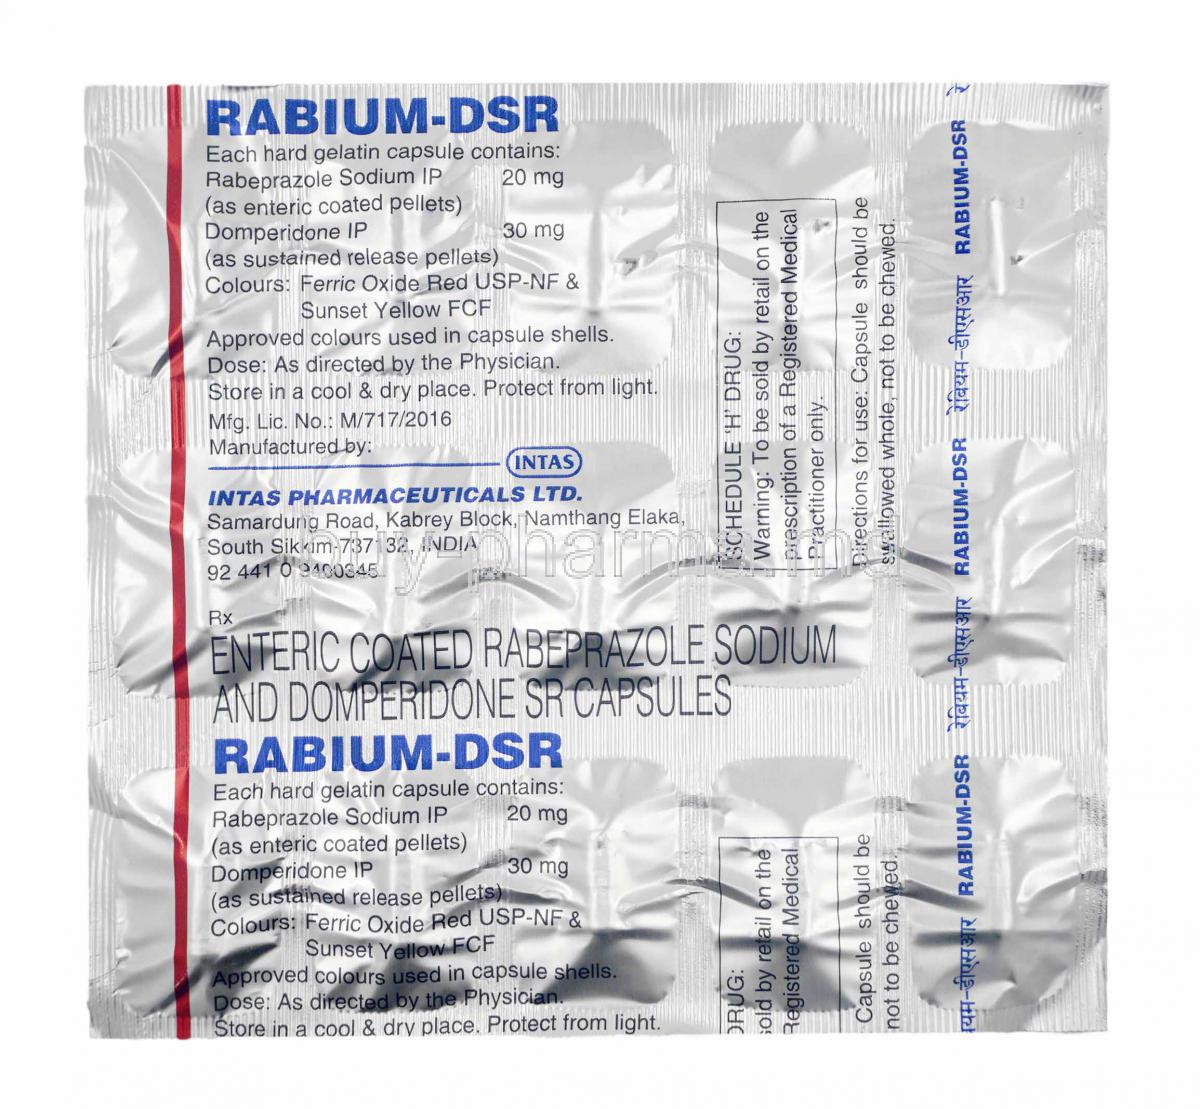 Rabium-DSR, Domperidone and Rabeprazole capsules